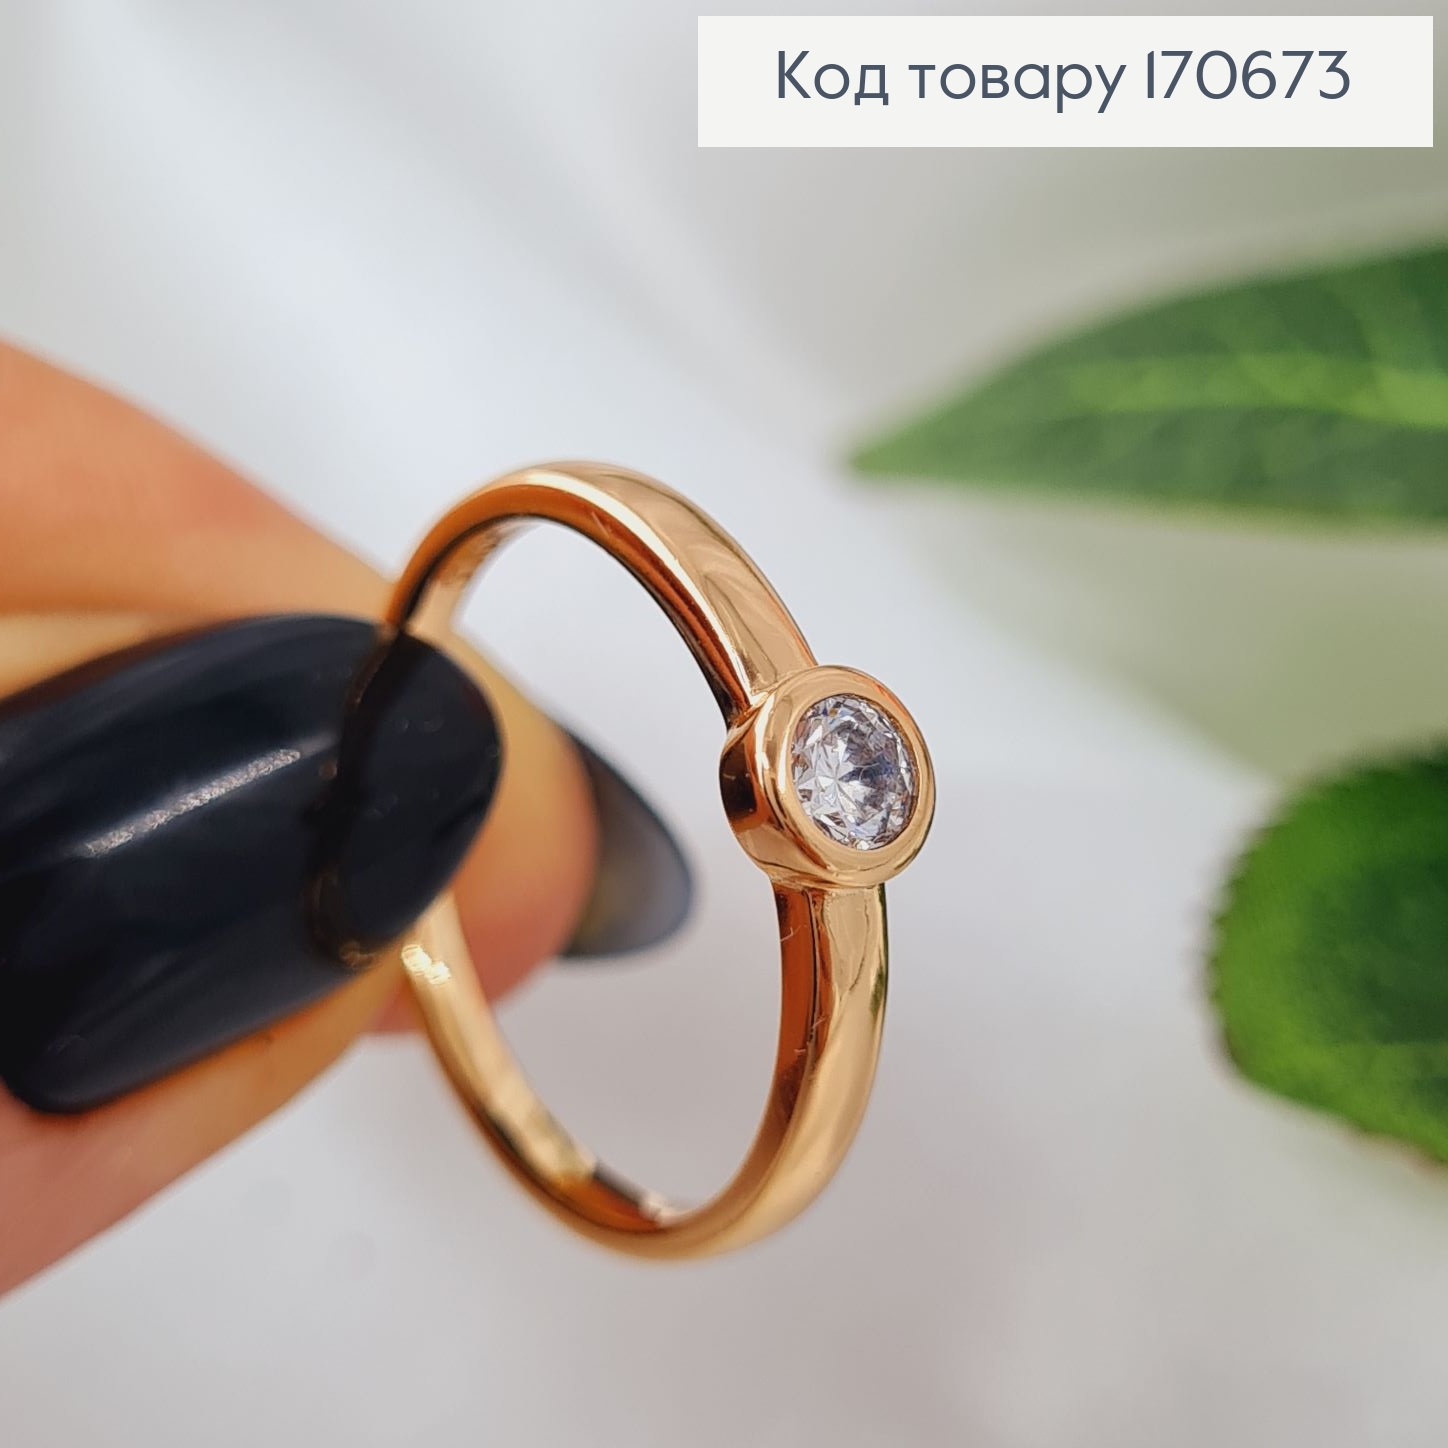 Кольцо с одним камнем в оправе, Xuping 18К 170673 фото 2